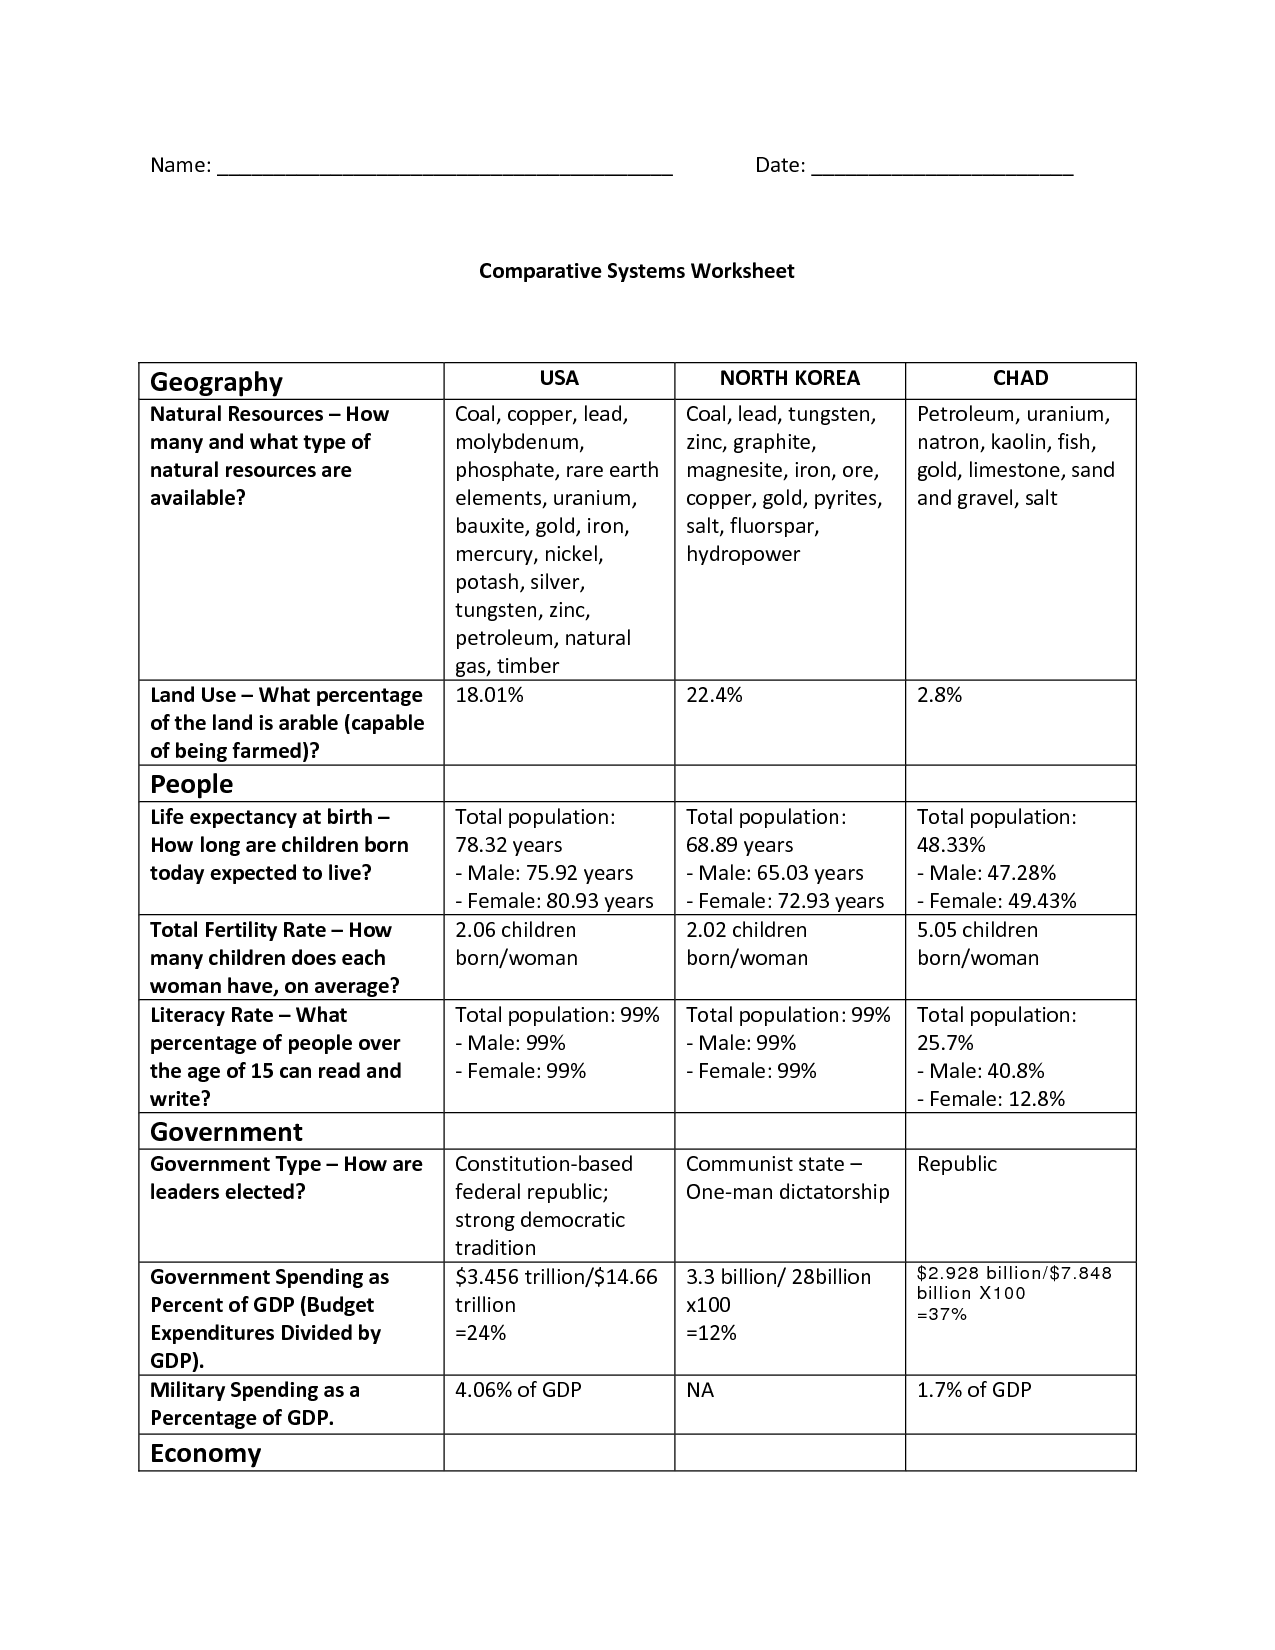 Economic Systems Worksheet Answers - Worksheet List With Regard To Economic Systems Worksheet Pdf